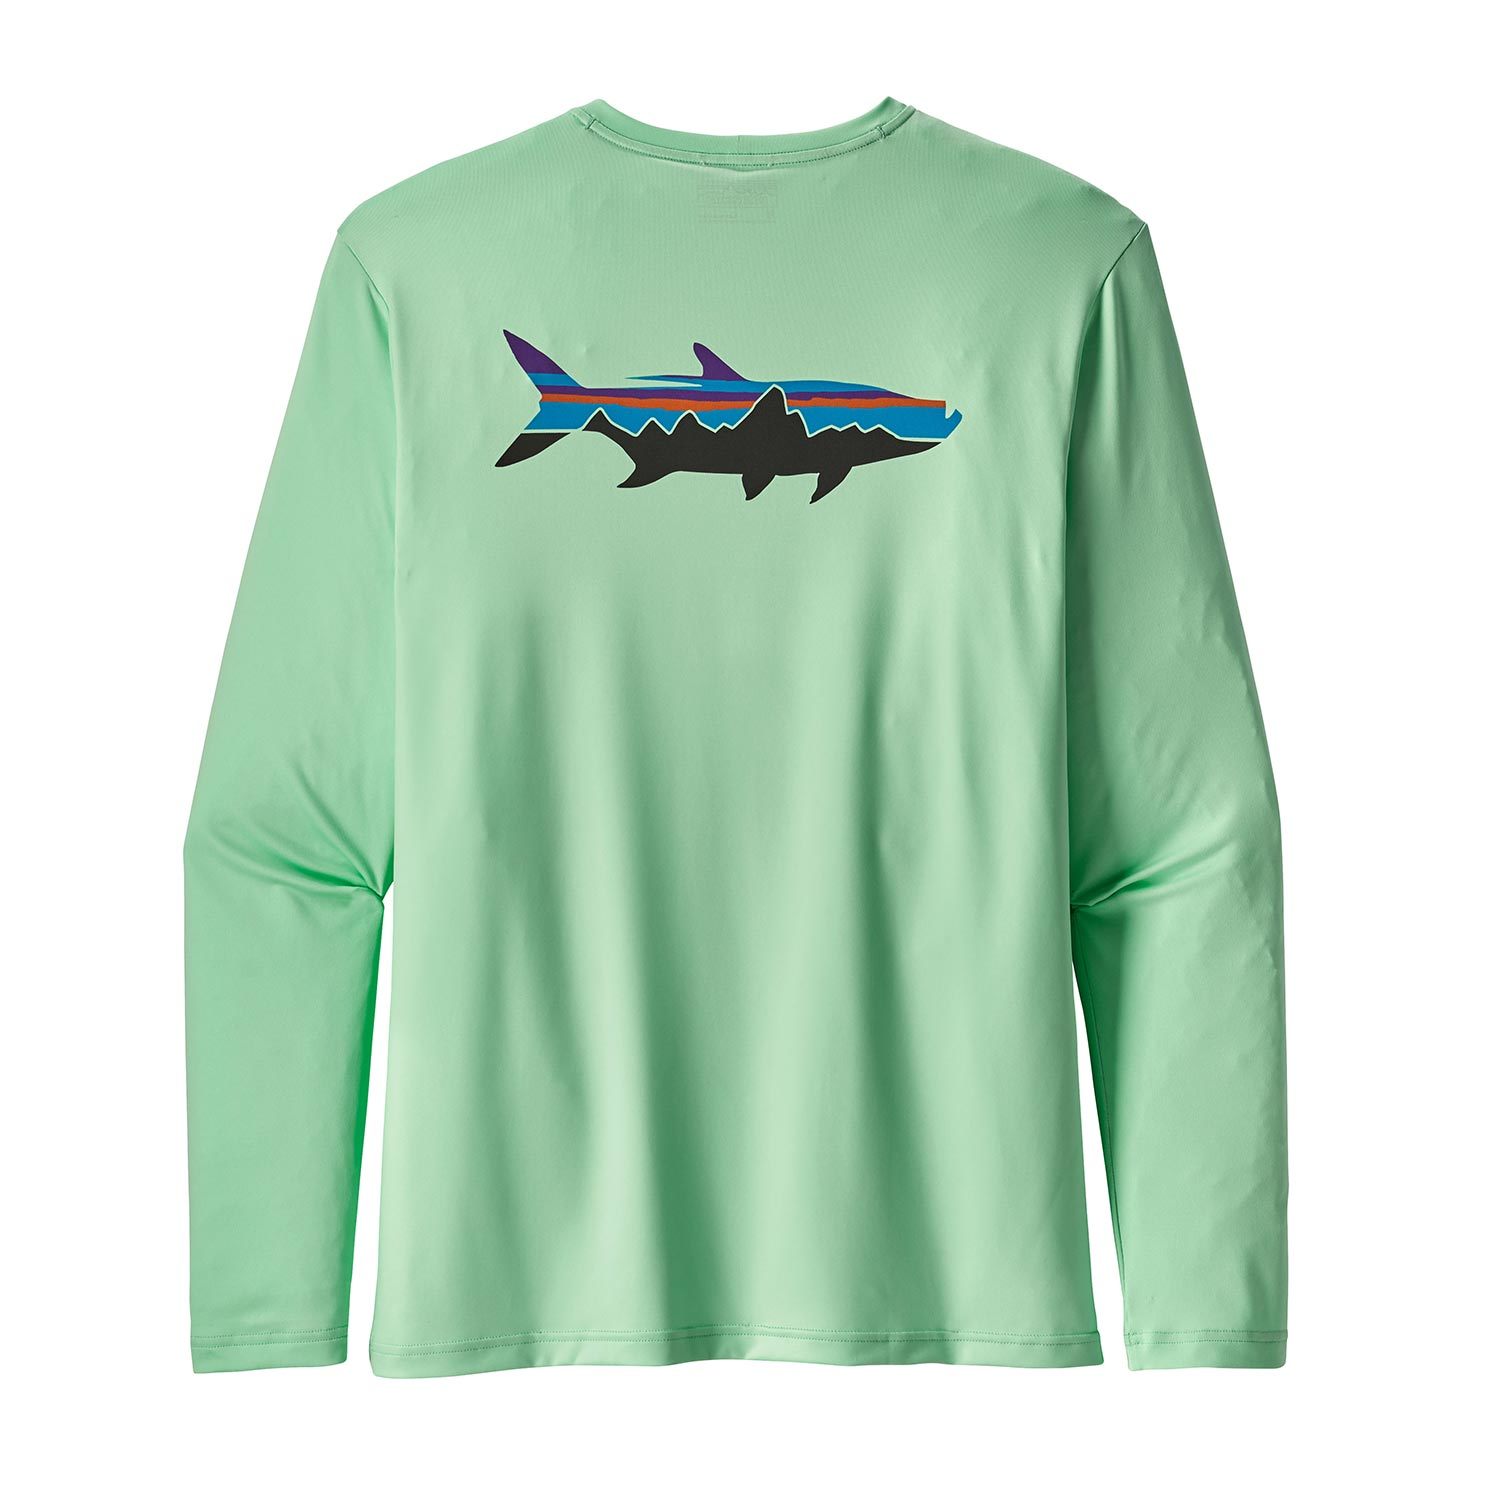 PATAGONIA Men's Graphic Tech Fish Shirt